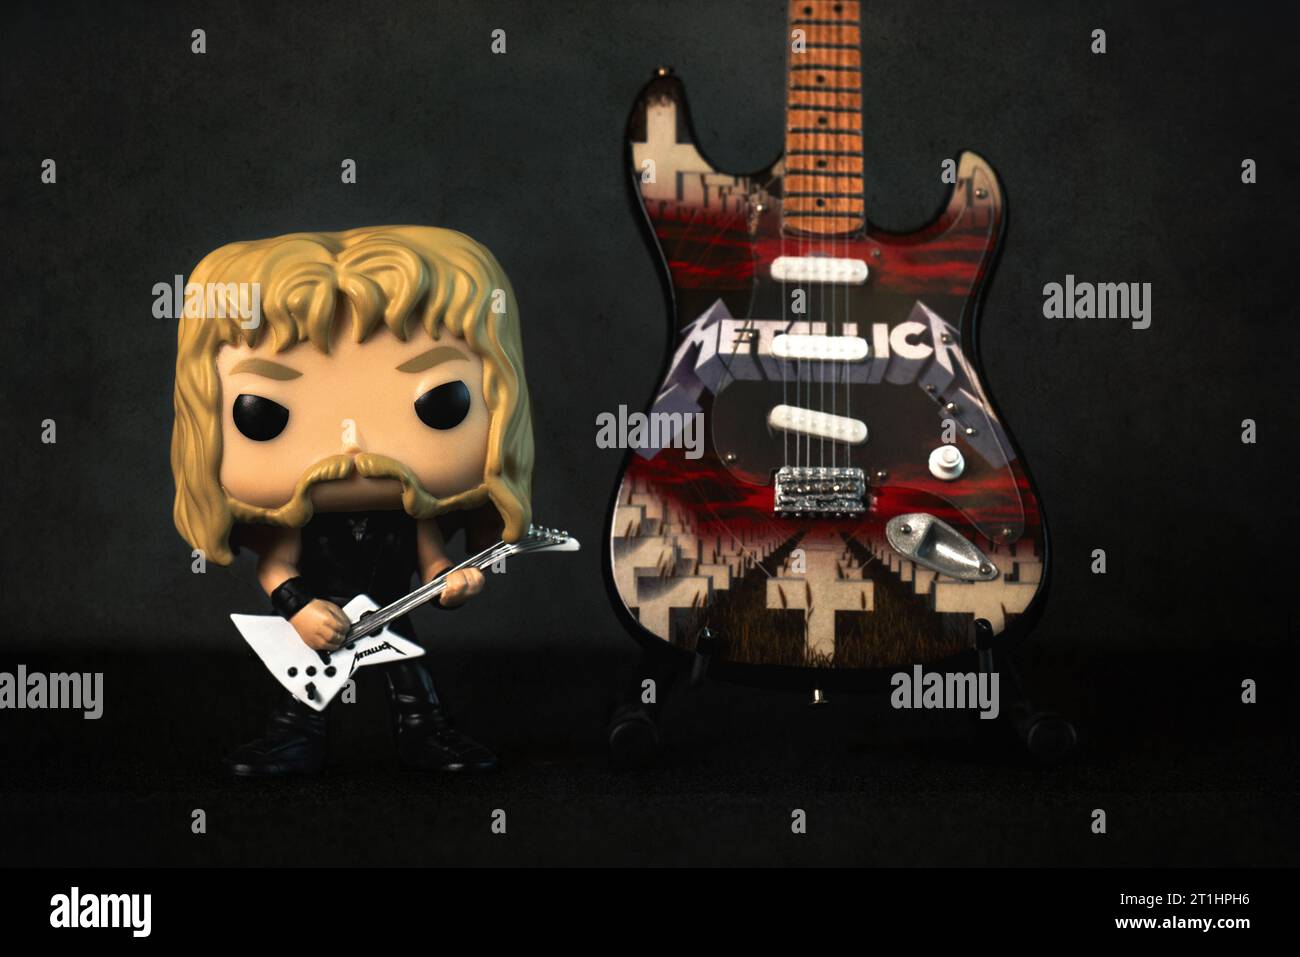 Funko POP vinyl figure of James hetfield singer of the american heavy metal group Metallica next to an electric guitar against dark background. Illust Stock Photo